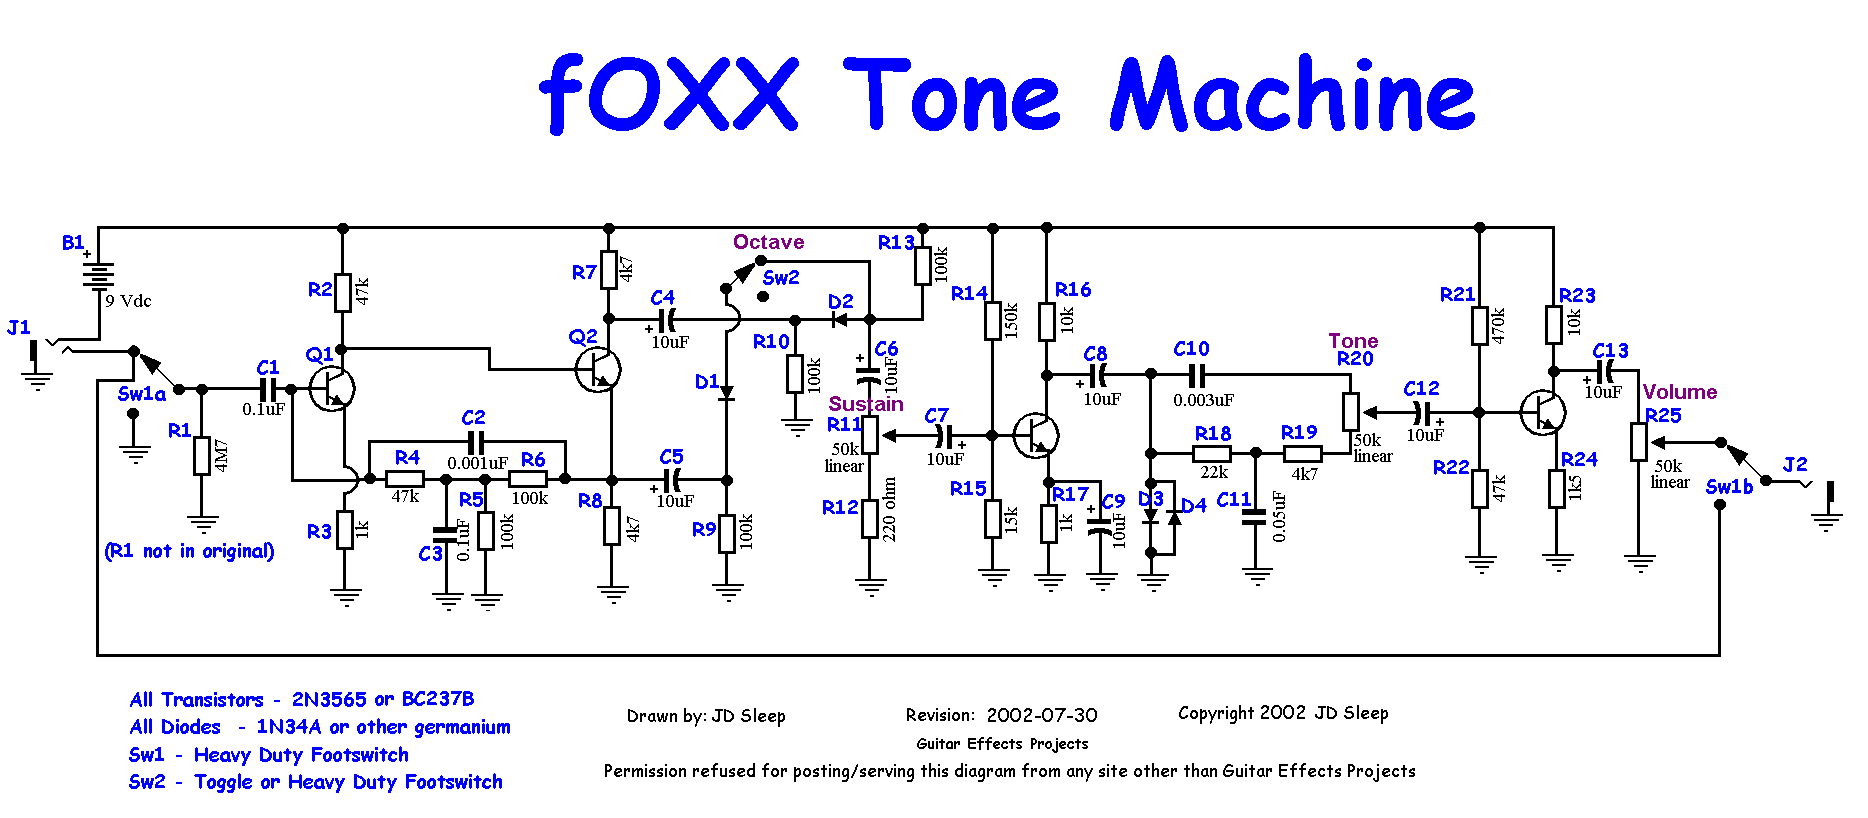 Foxx Tone Machine breadboard. Something popped, what?